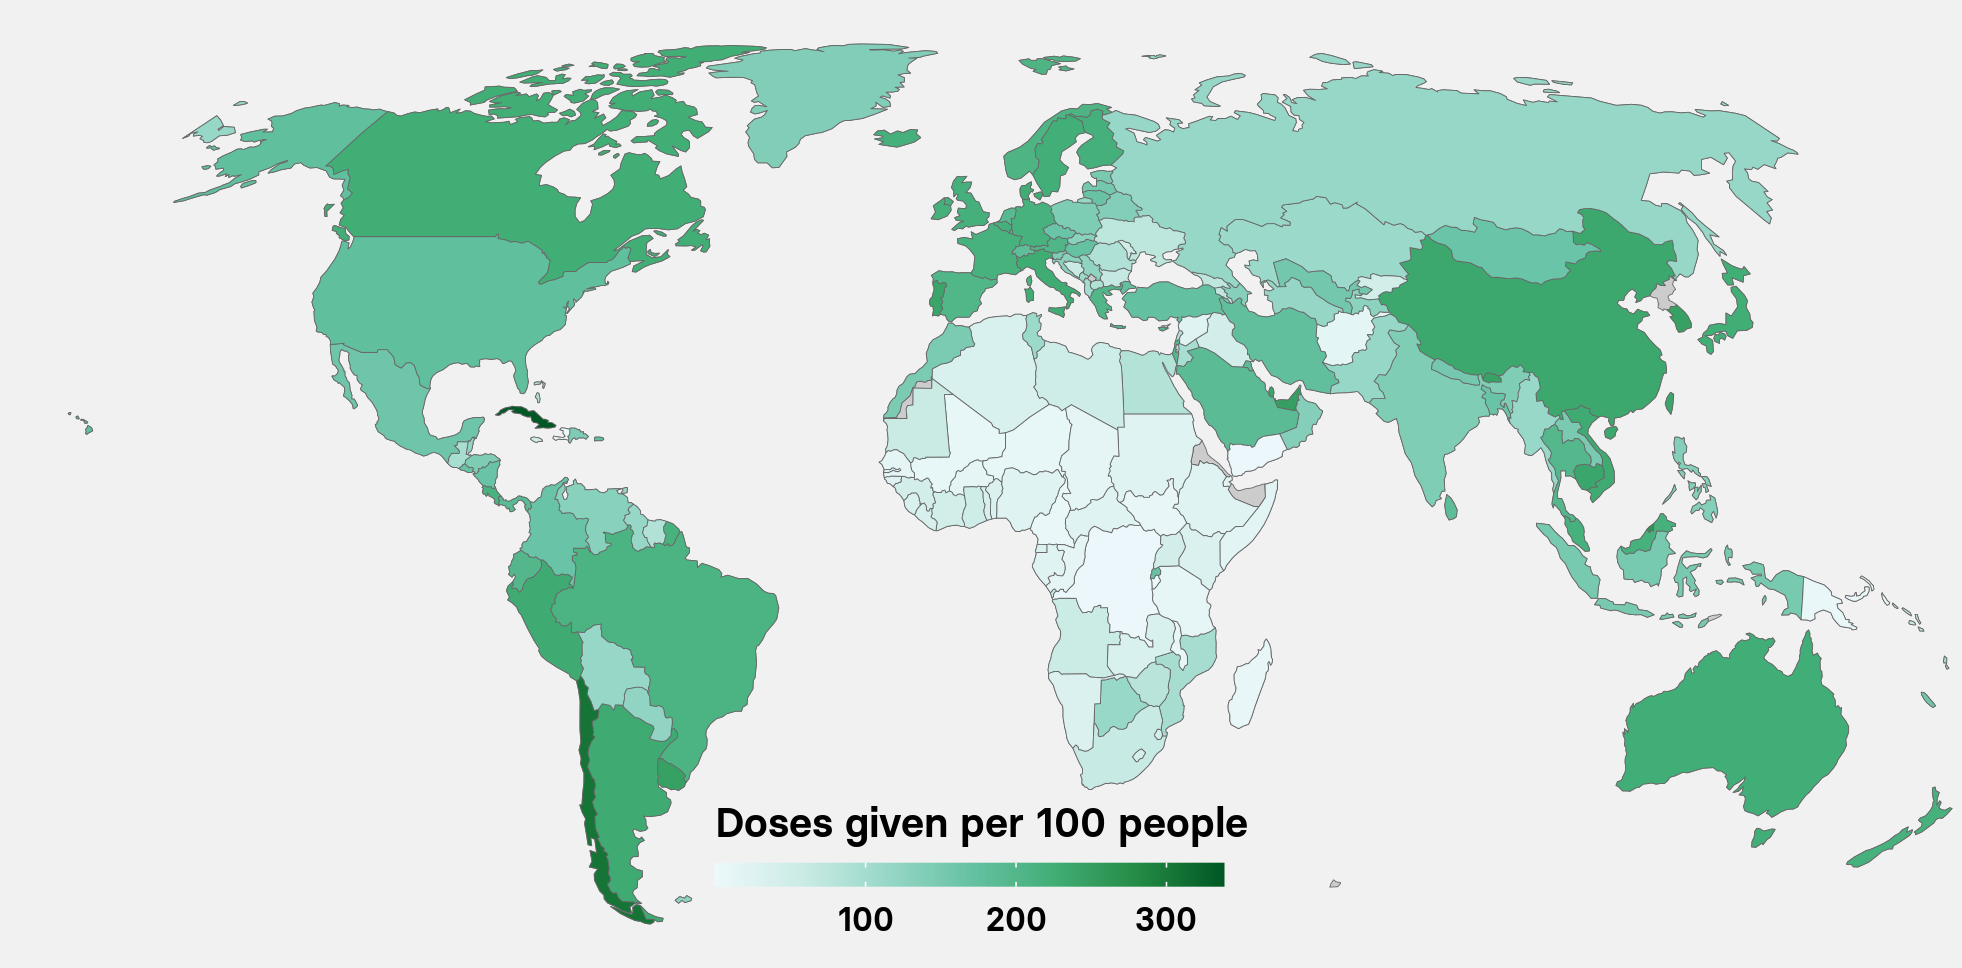 Immunization rate per 100 people worldwide